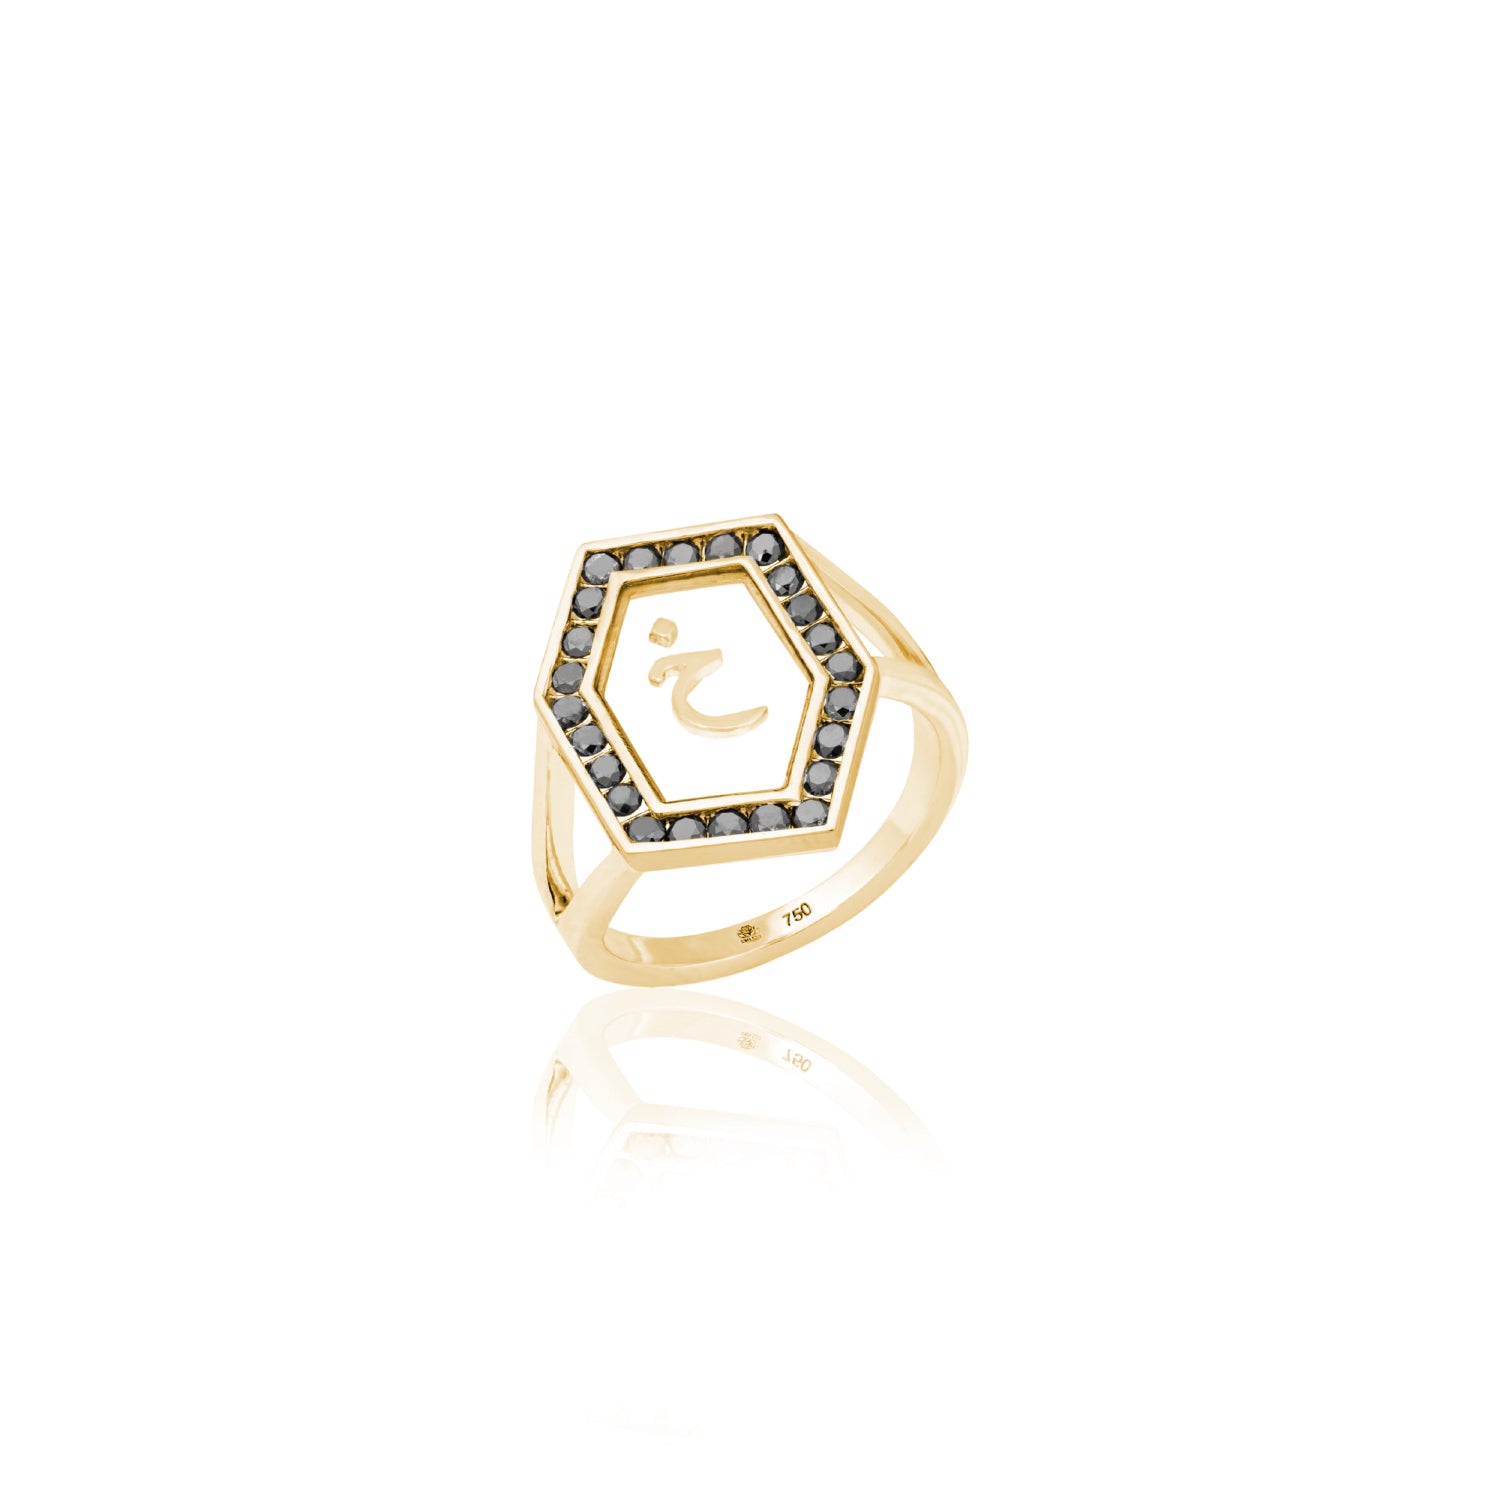 Qamoos 1.0 Letter خ Black Diamond Ring in Yellow Gold